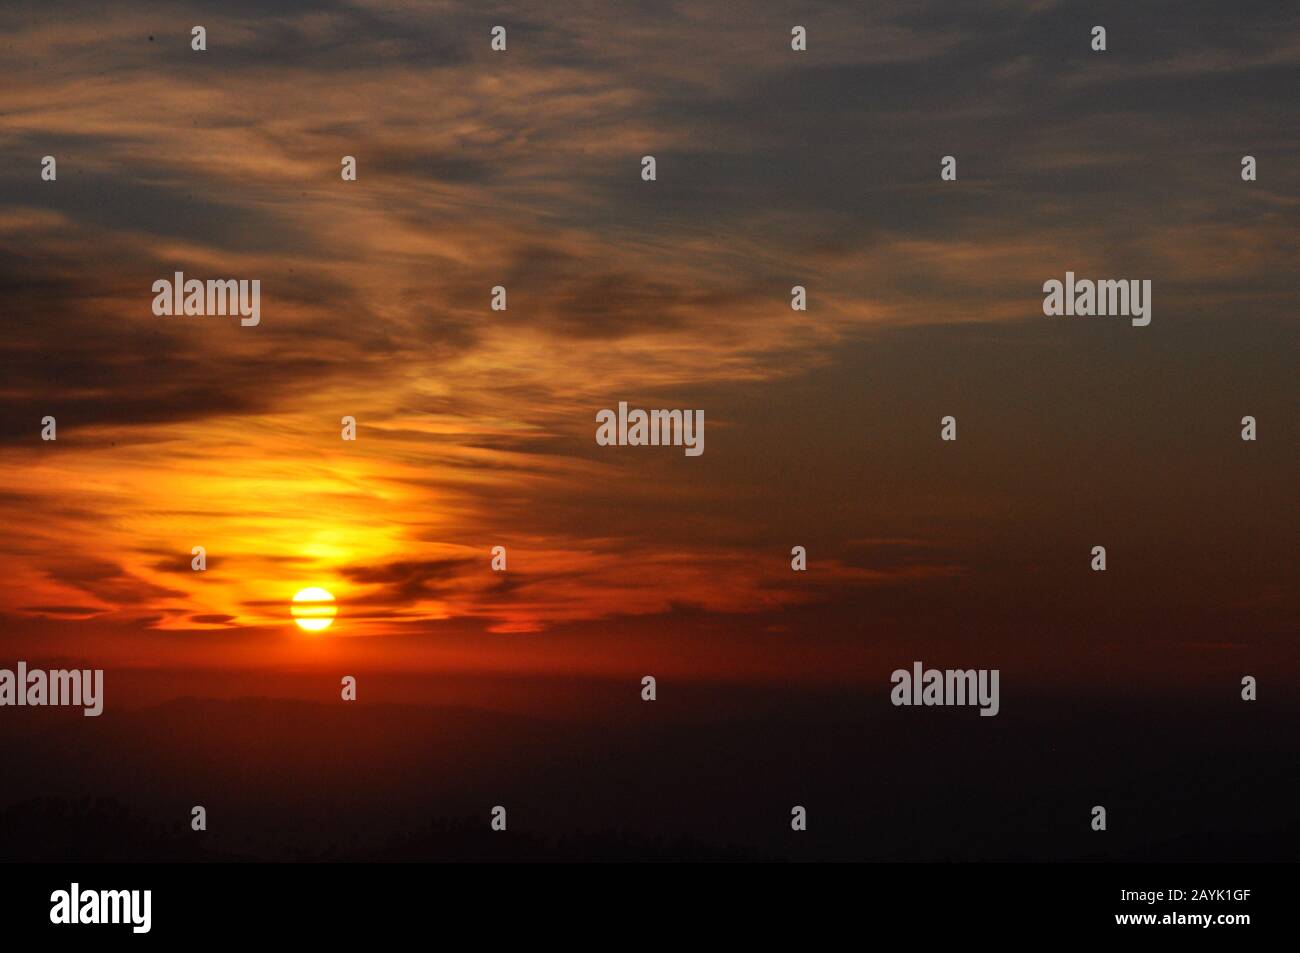 Bel tramonto cielo sfondo con nuvole nascondere sole Foto Stock